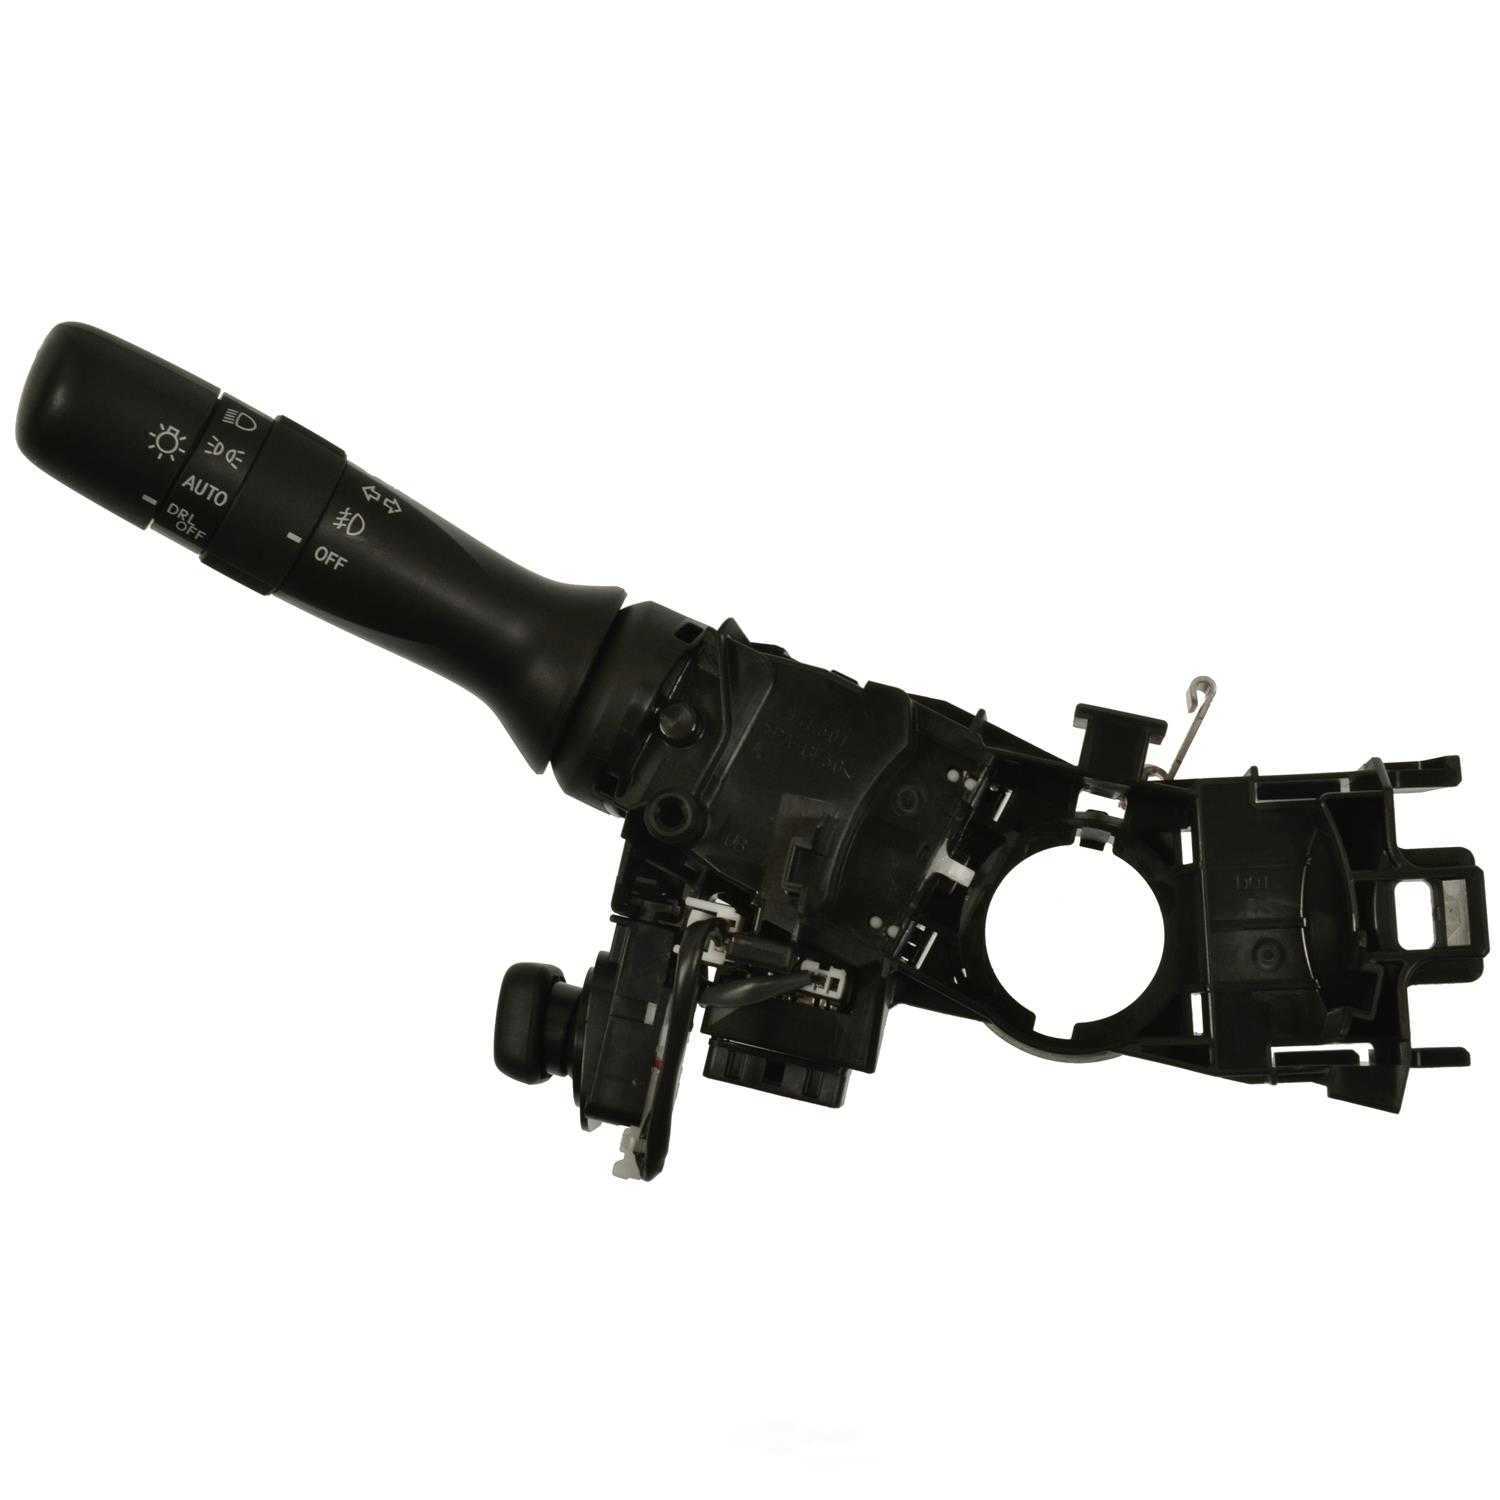 STANDARD MOTOR PRODUCTS - Headlight Switch - STA CBS2397